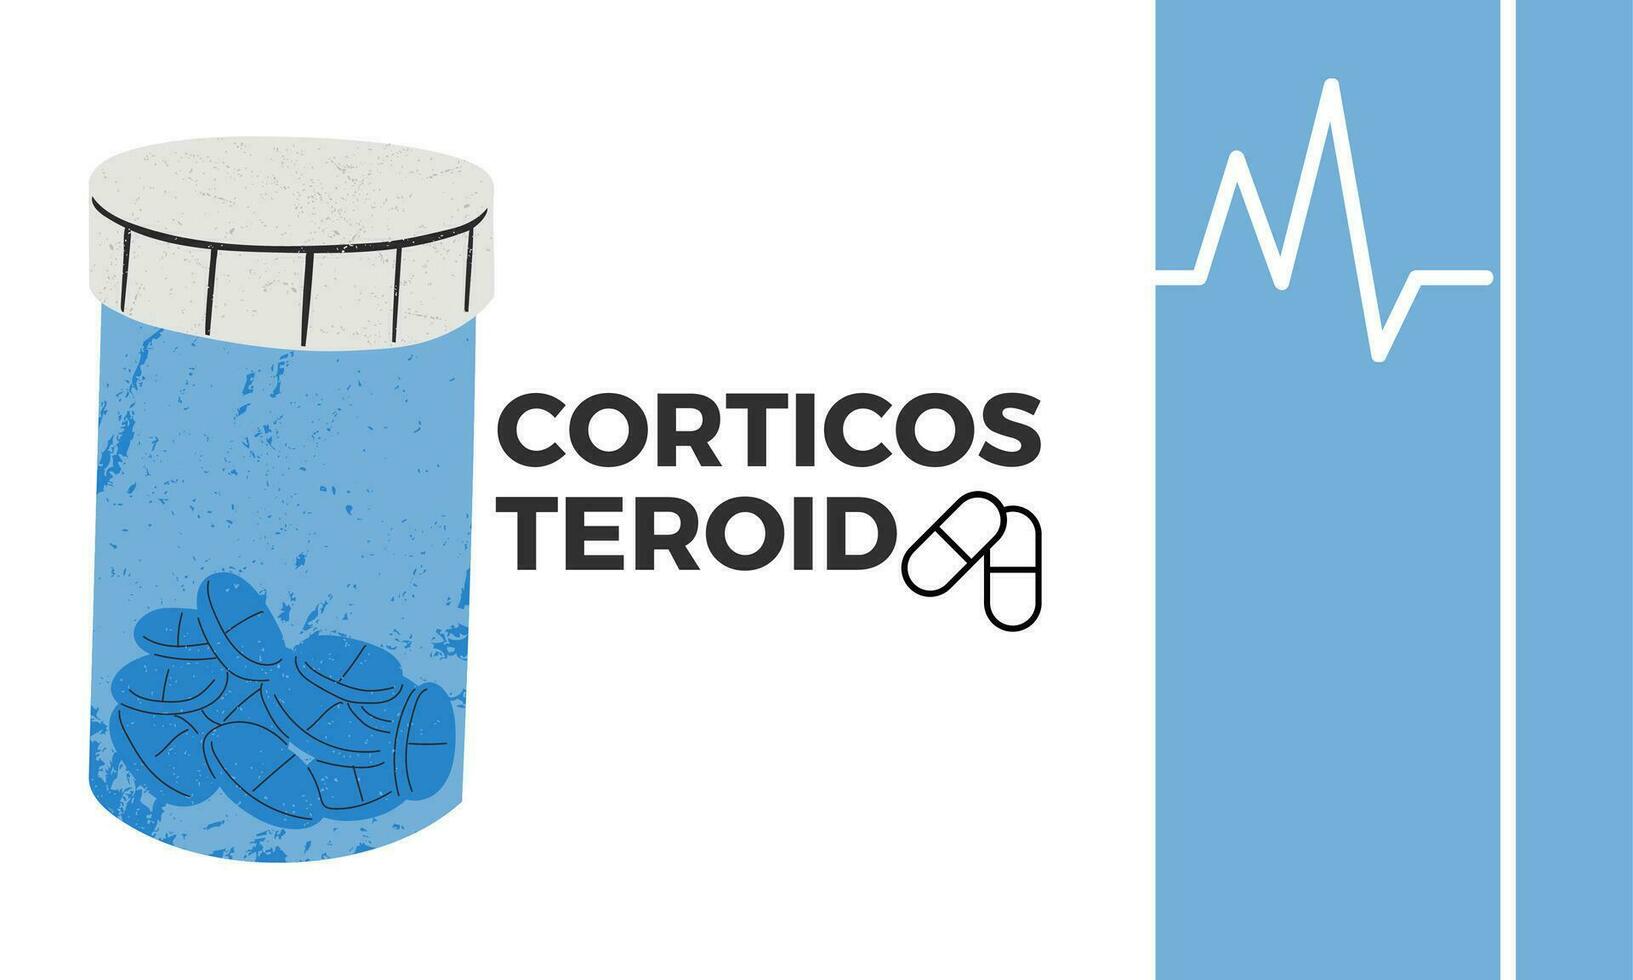 Corticosteroid. Corticosteroid Medical pills in RX prescription drug bottle vector illustration